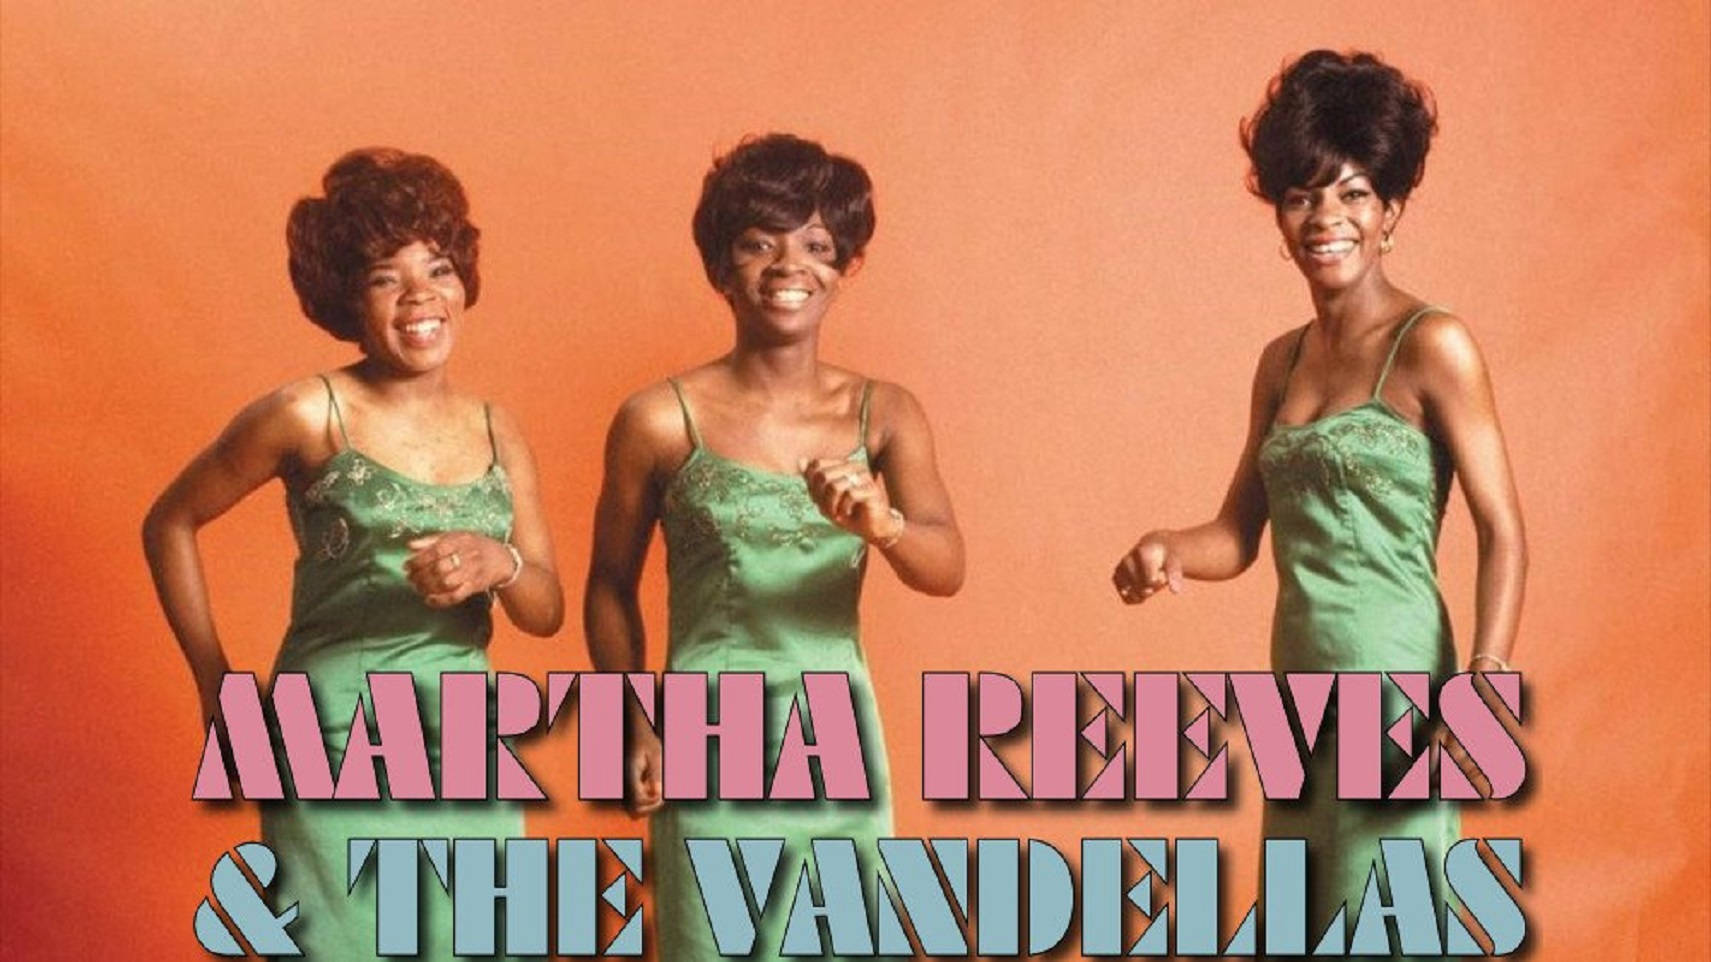 Marthaand The Vandellas Soul Singers: Martha Och The Vandellas Soul-sångerskor. Wallpaper